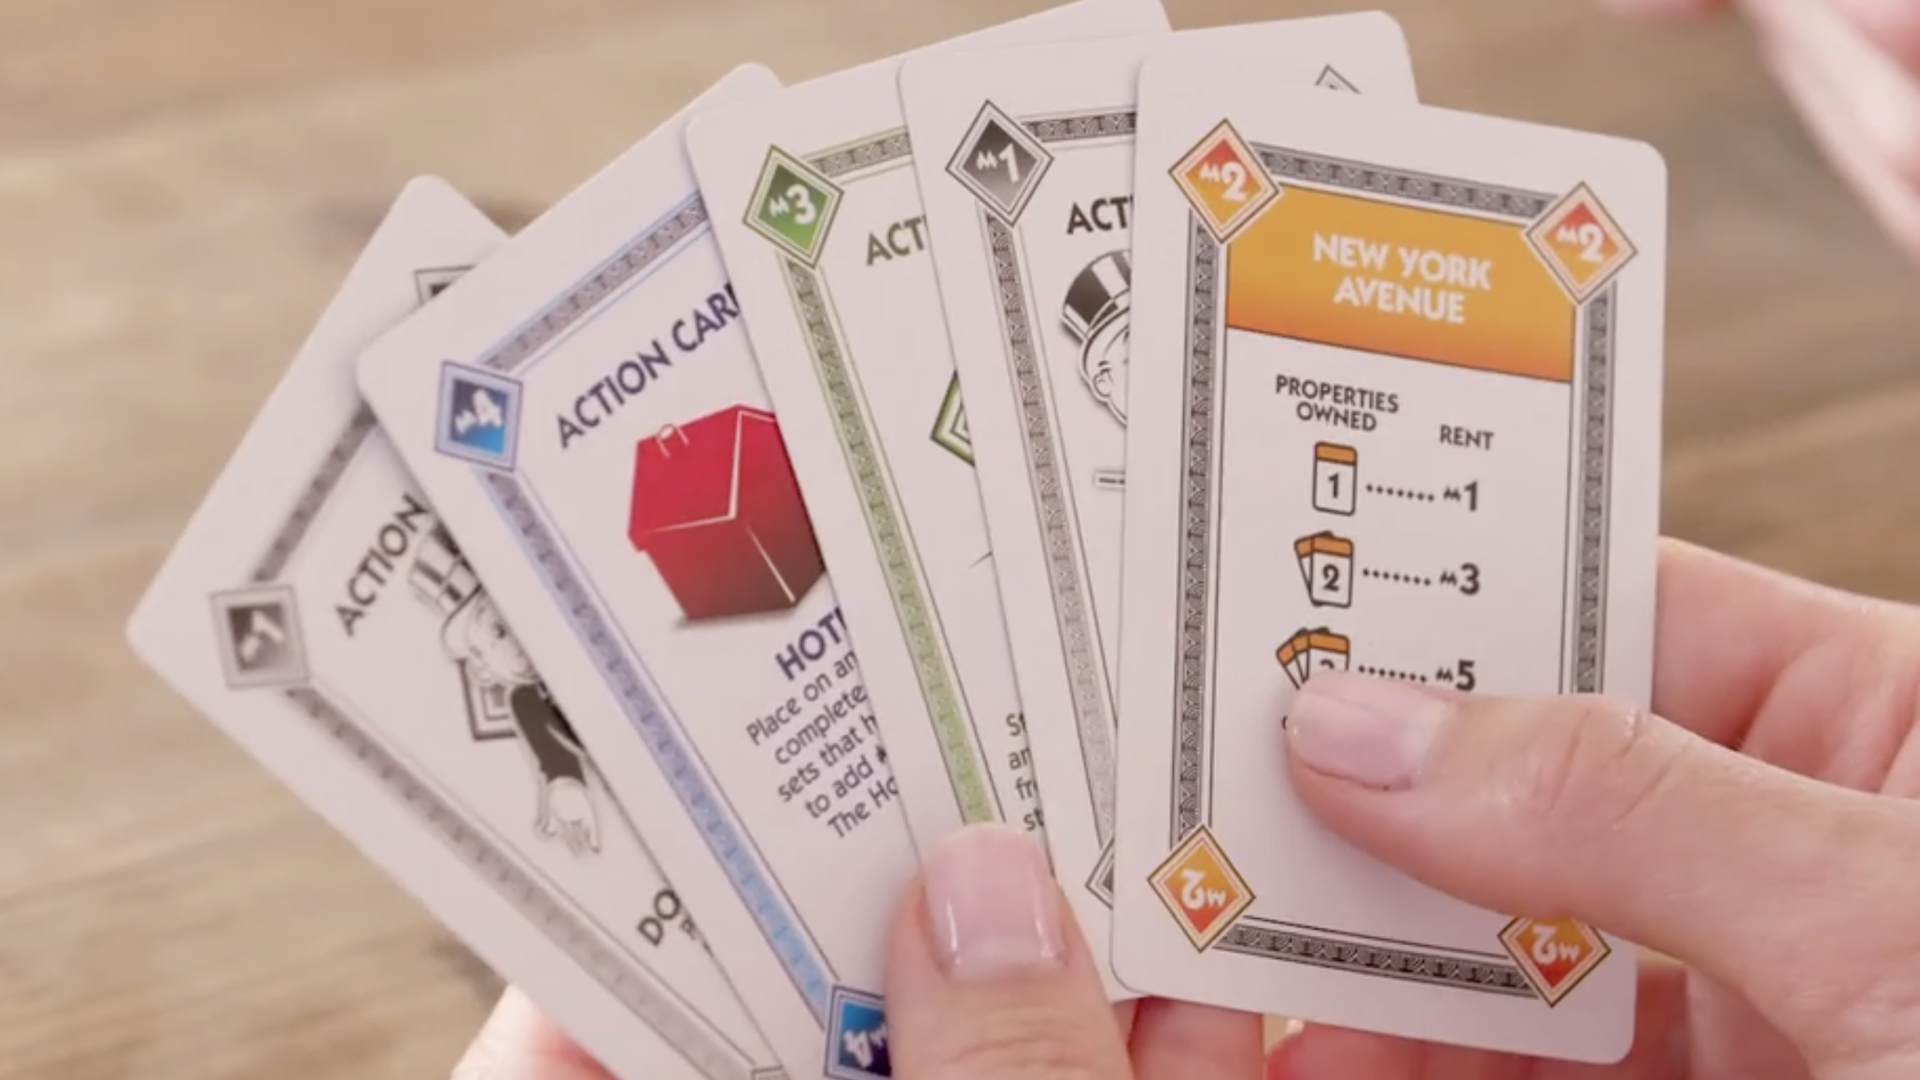 Monopoly Deal cards held in hands